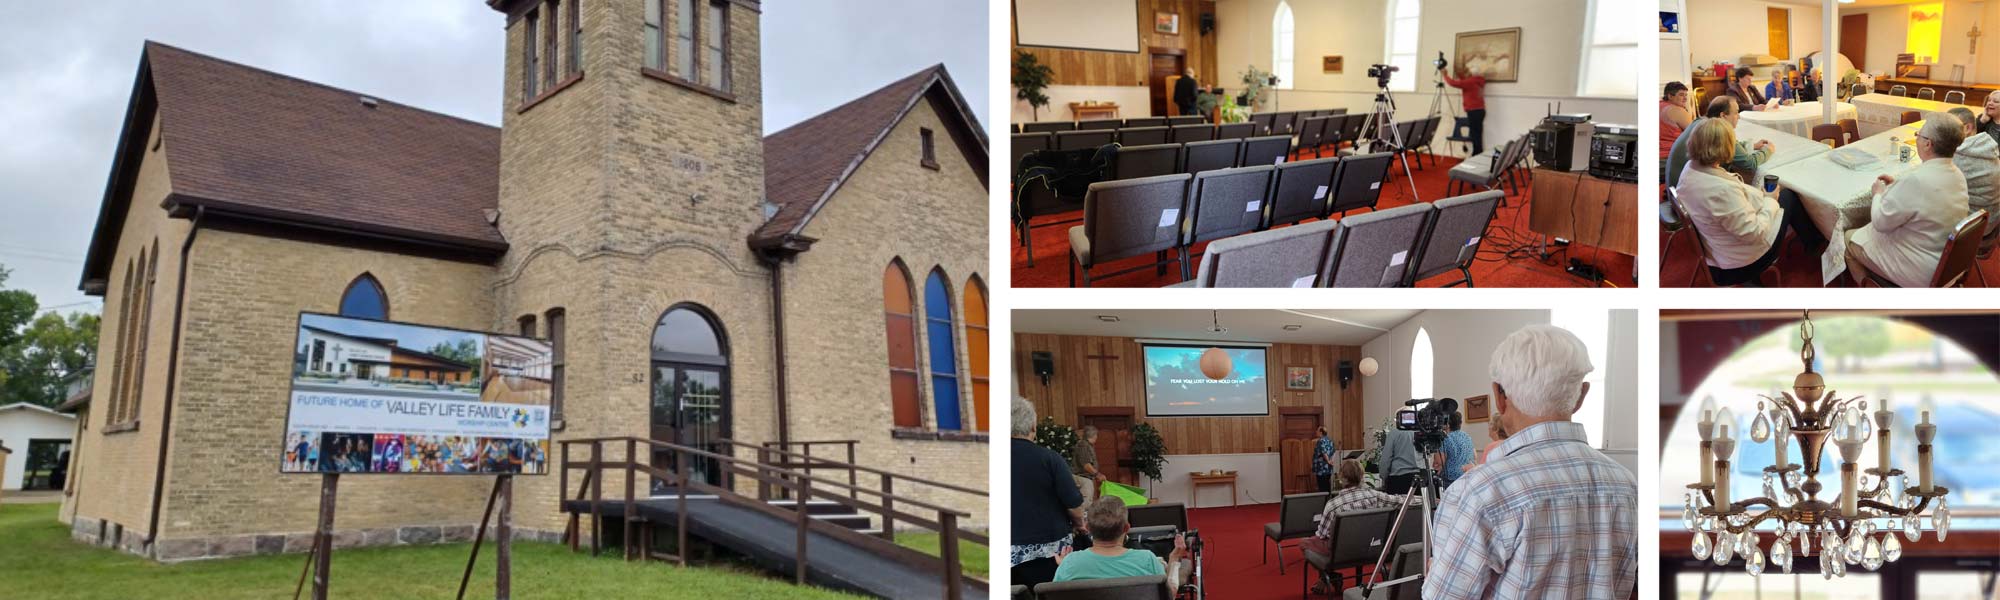 Exterior and interior images of Calvary Church in Minnedosa, Manitoba